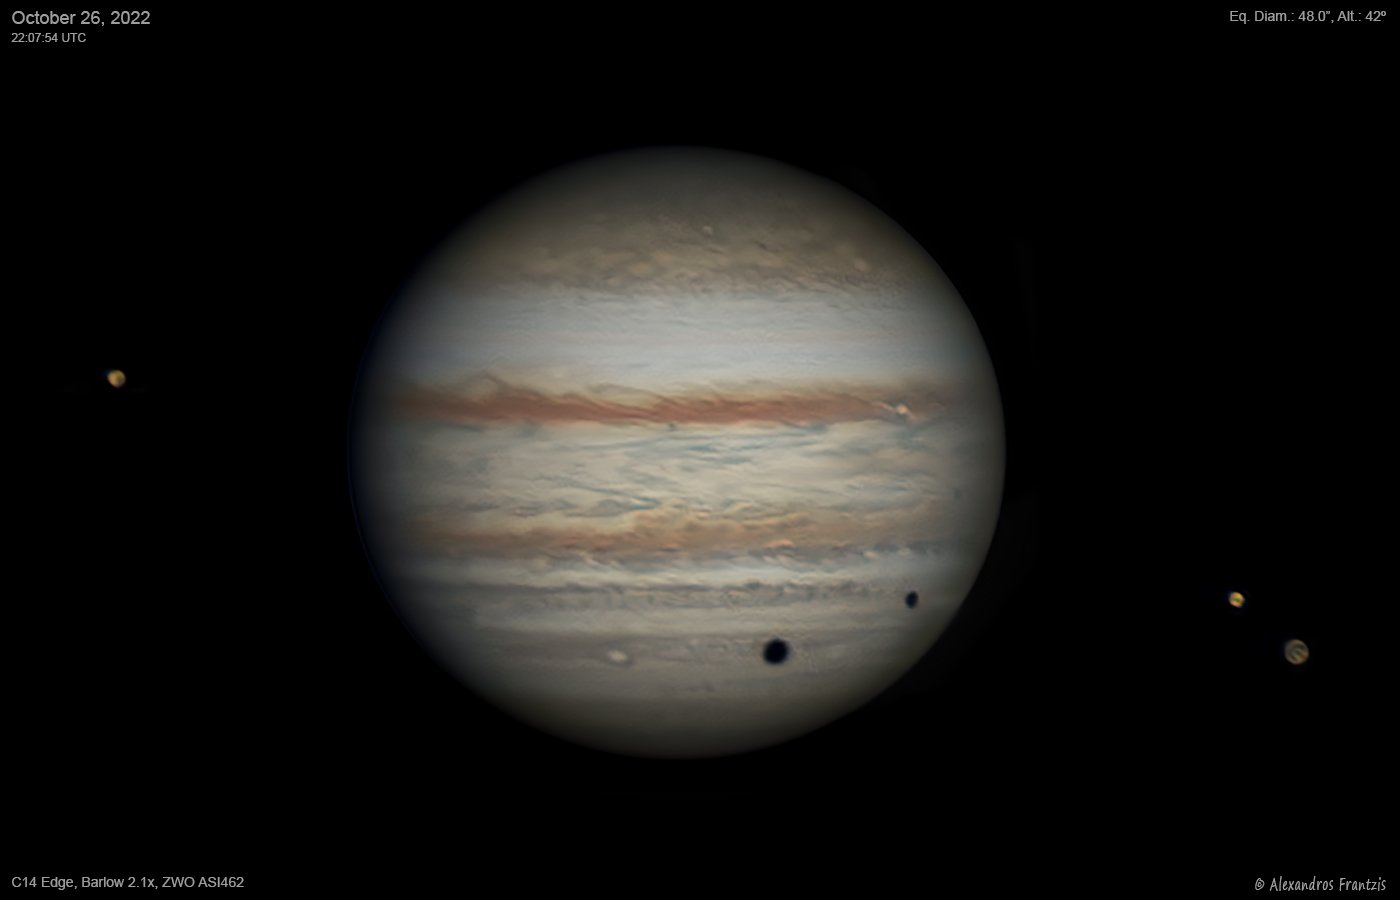 2022-10-26, Jupiter with Europa, Ganymede & Io, C14 Edge, Barlow 2.1x, ASI 462, 22_07_54 UTC.jpg